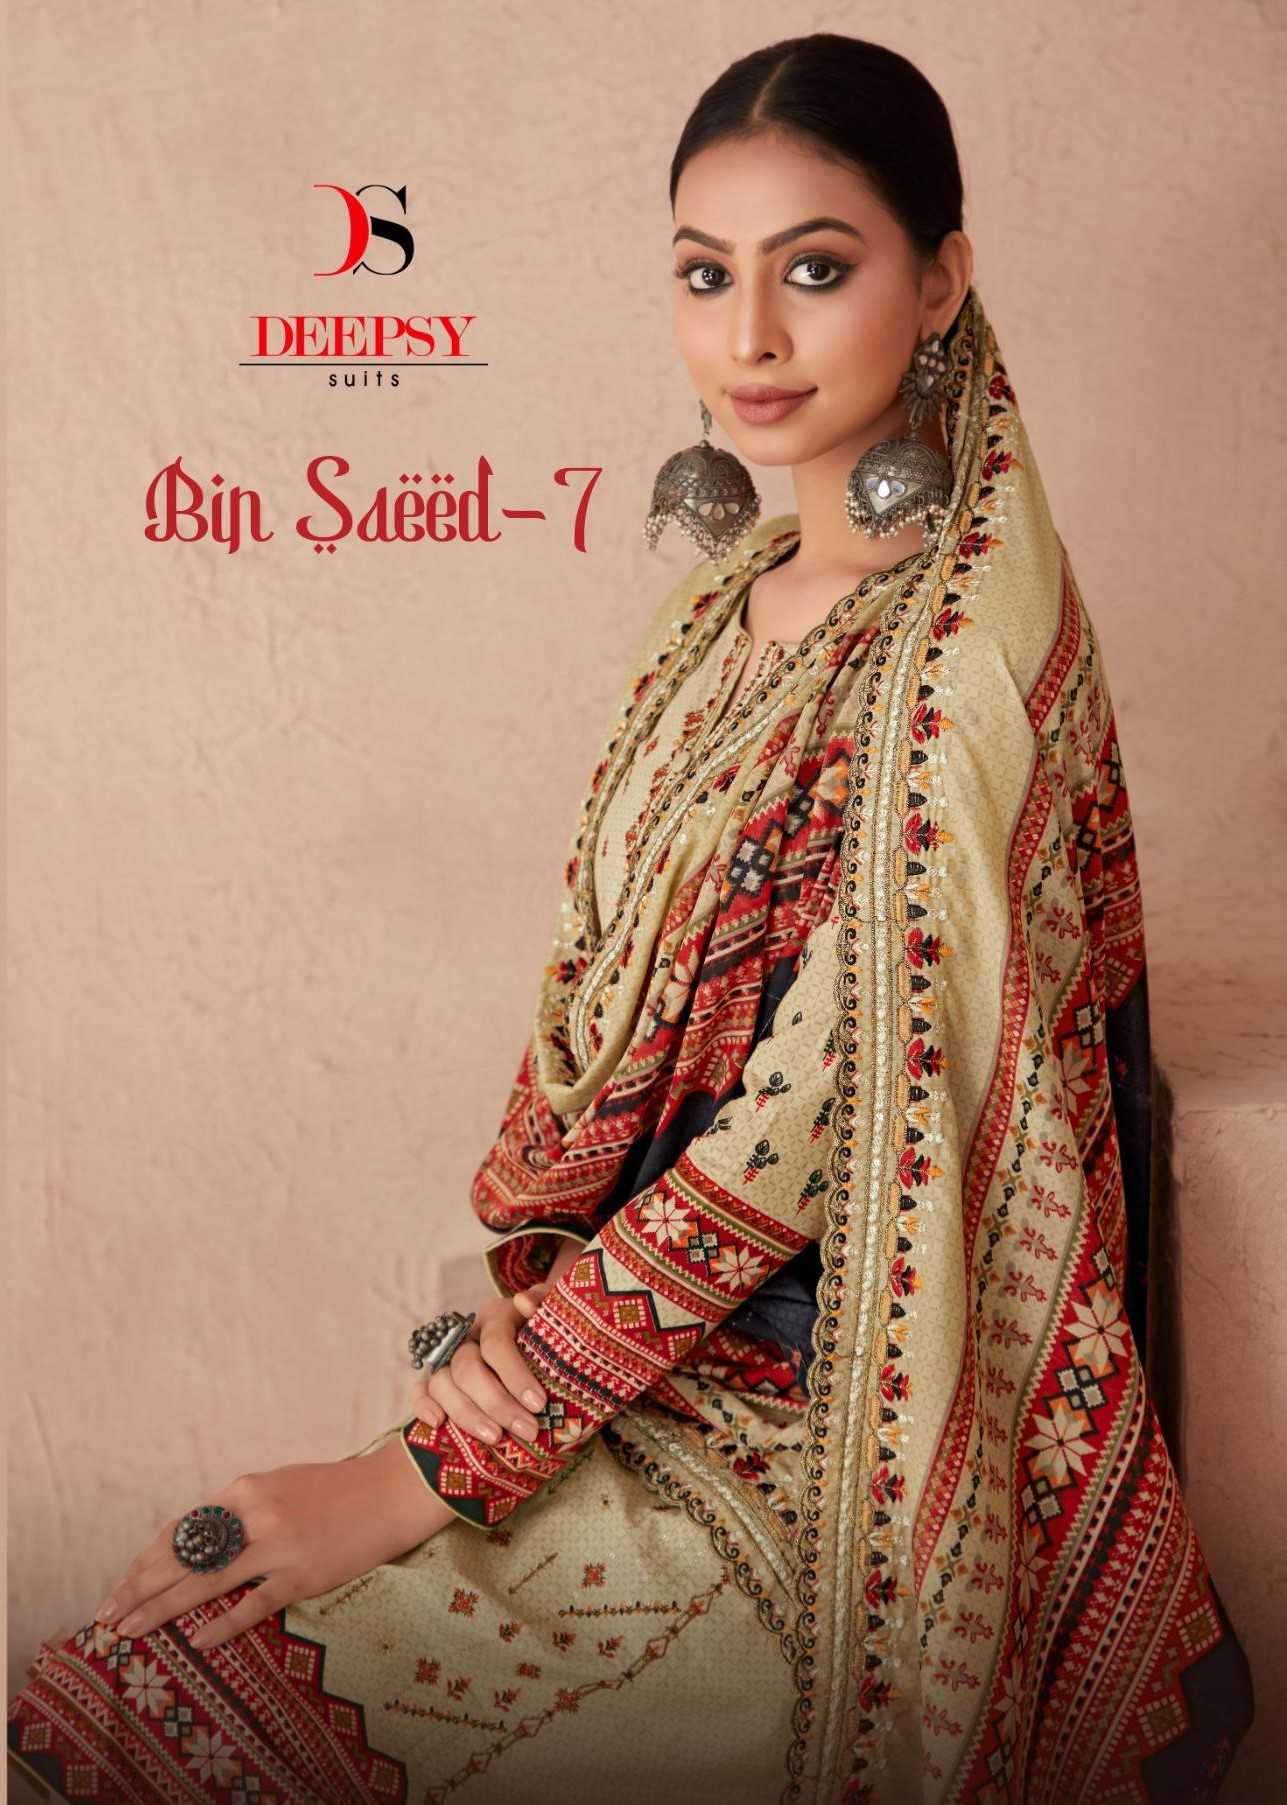 deepsy suits bin saeed vol 7 beautiful digital print pakistani embroidery unstitch suit